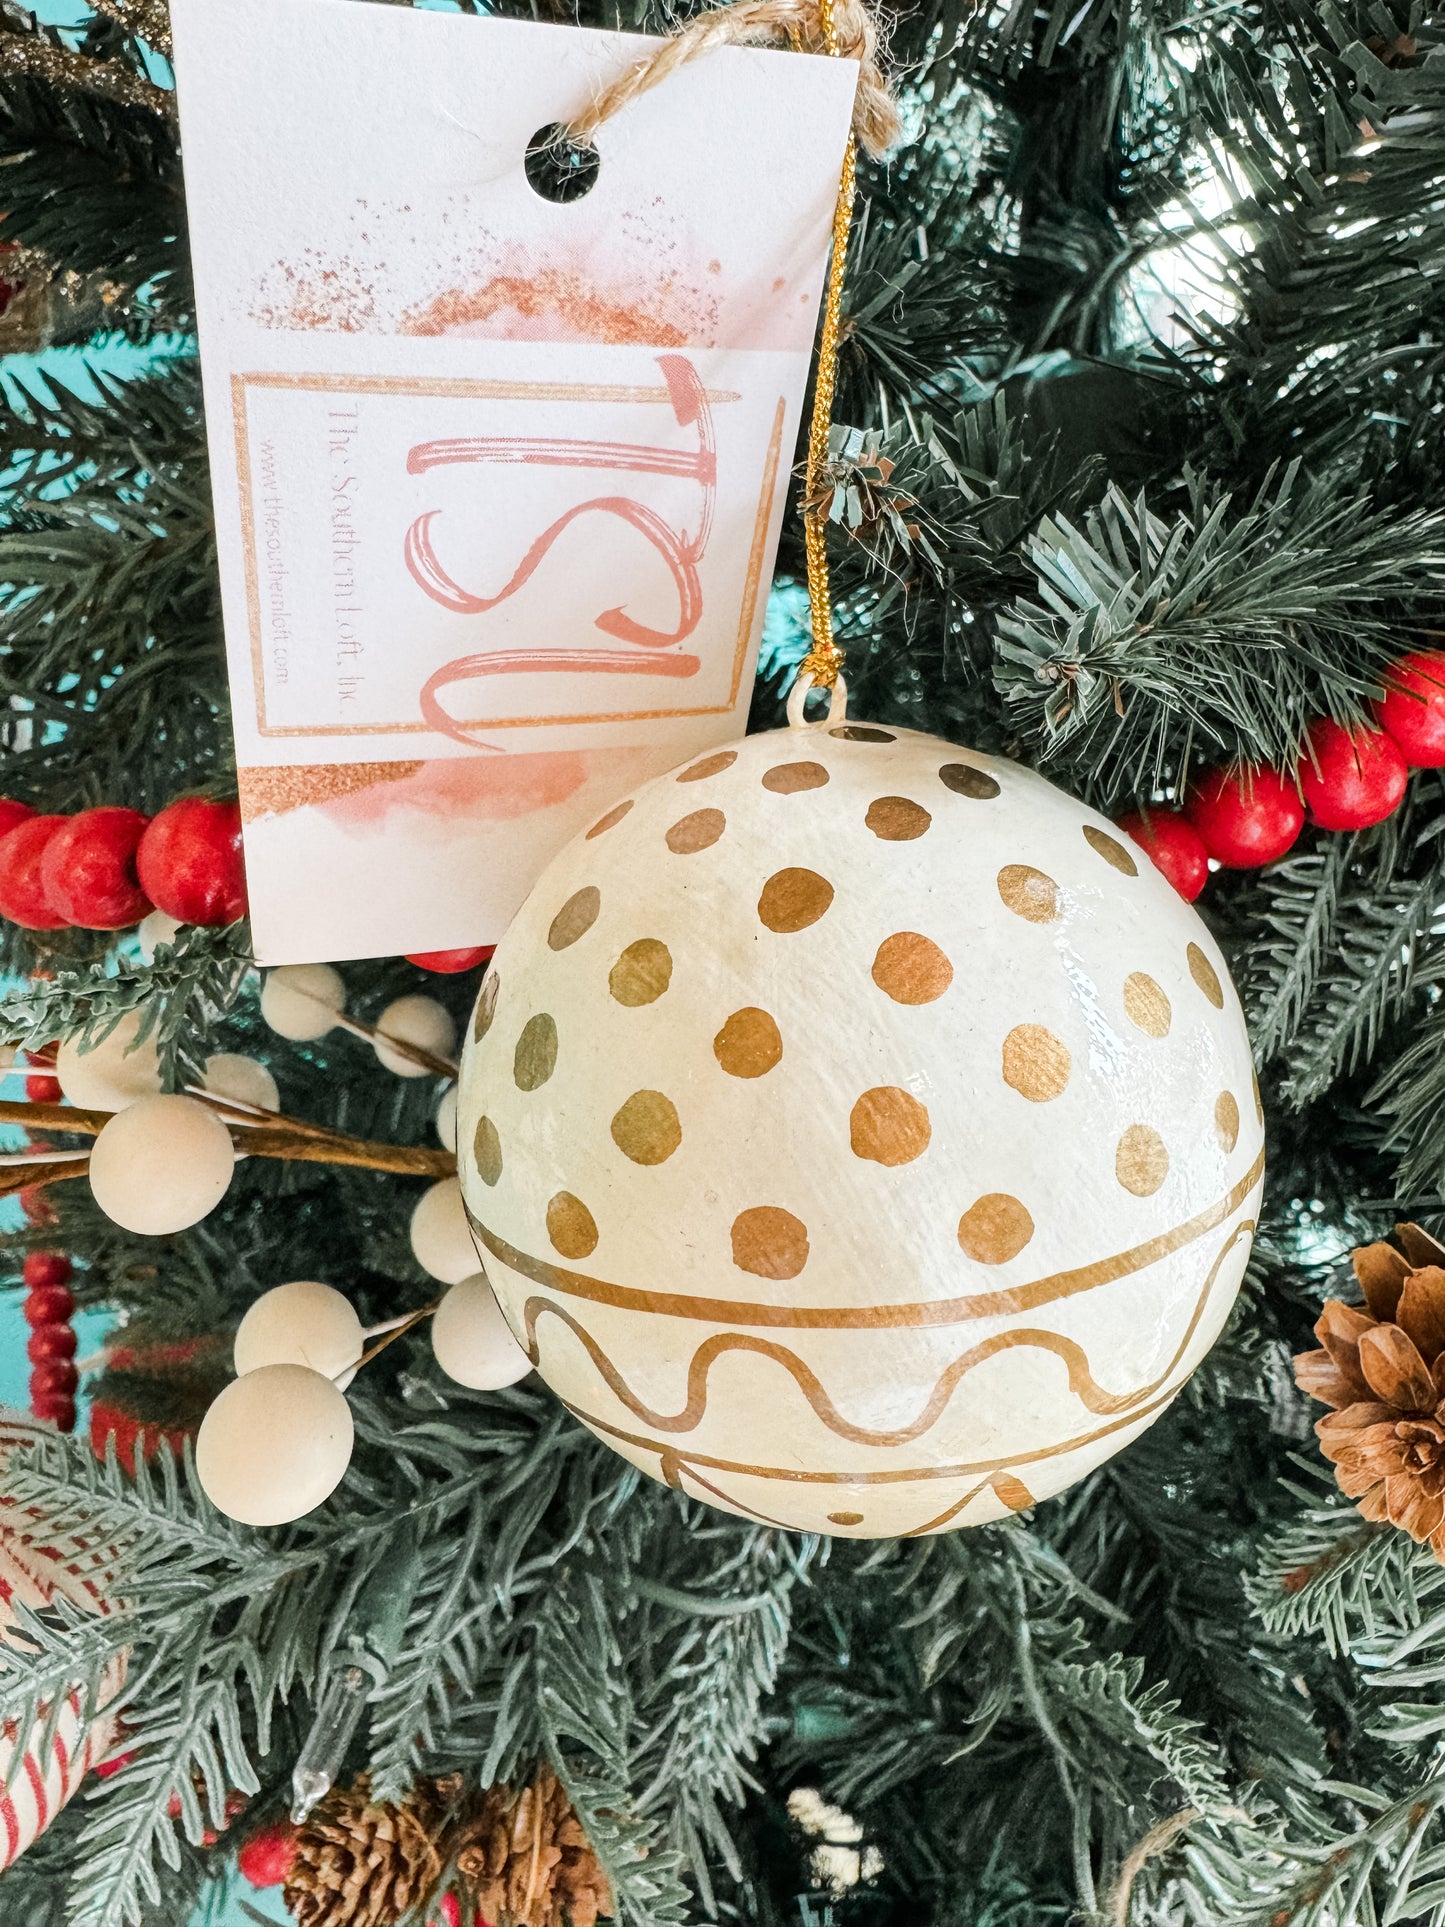 Paper Mache Christmas Ornaments